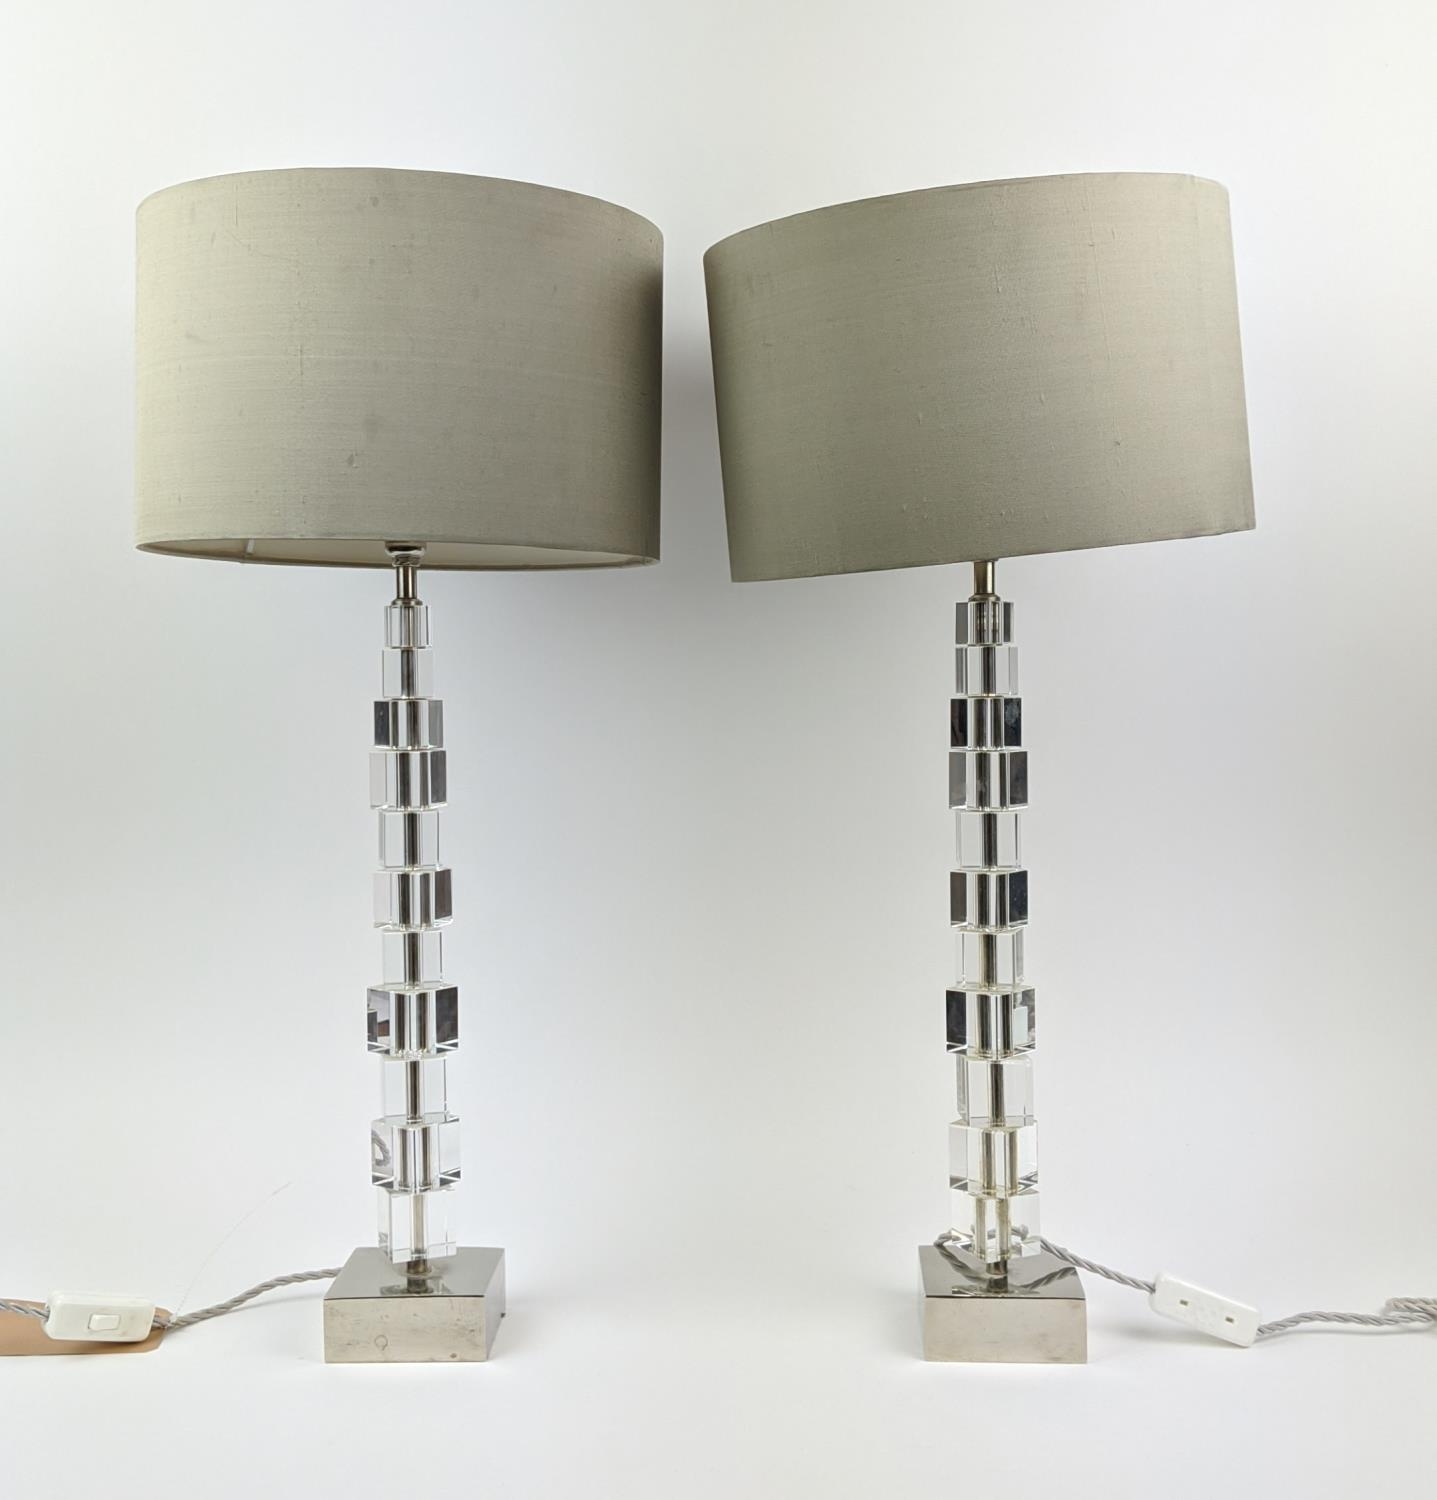 PORTA ROMANA TABLE LAMPS, a pair, with Porta Romana shades, 66cm H. (2)